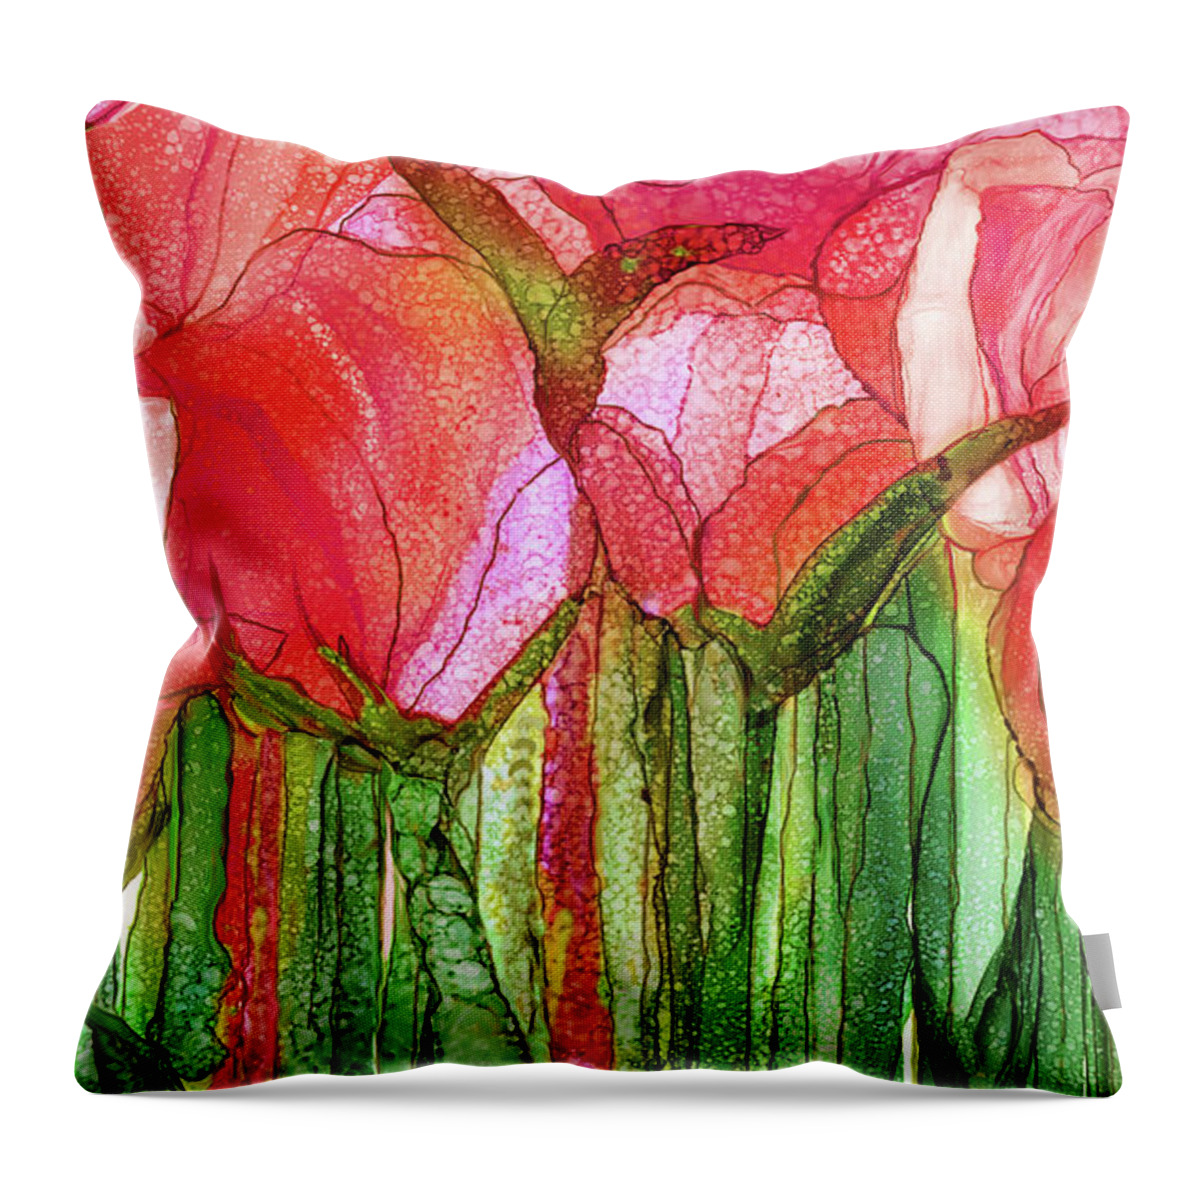 Carol Cavalaris Throw Pillow featuring the mixed media Tulip Bloomies 3 - Red by Carol Cavalaris